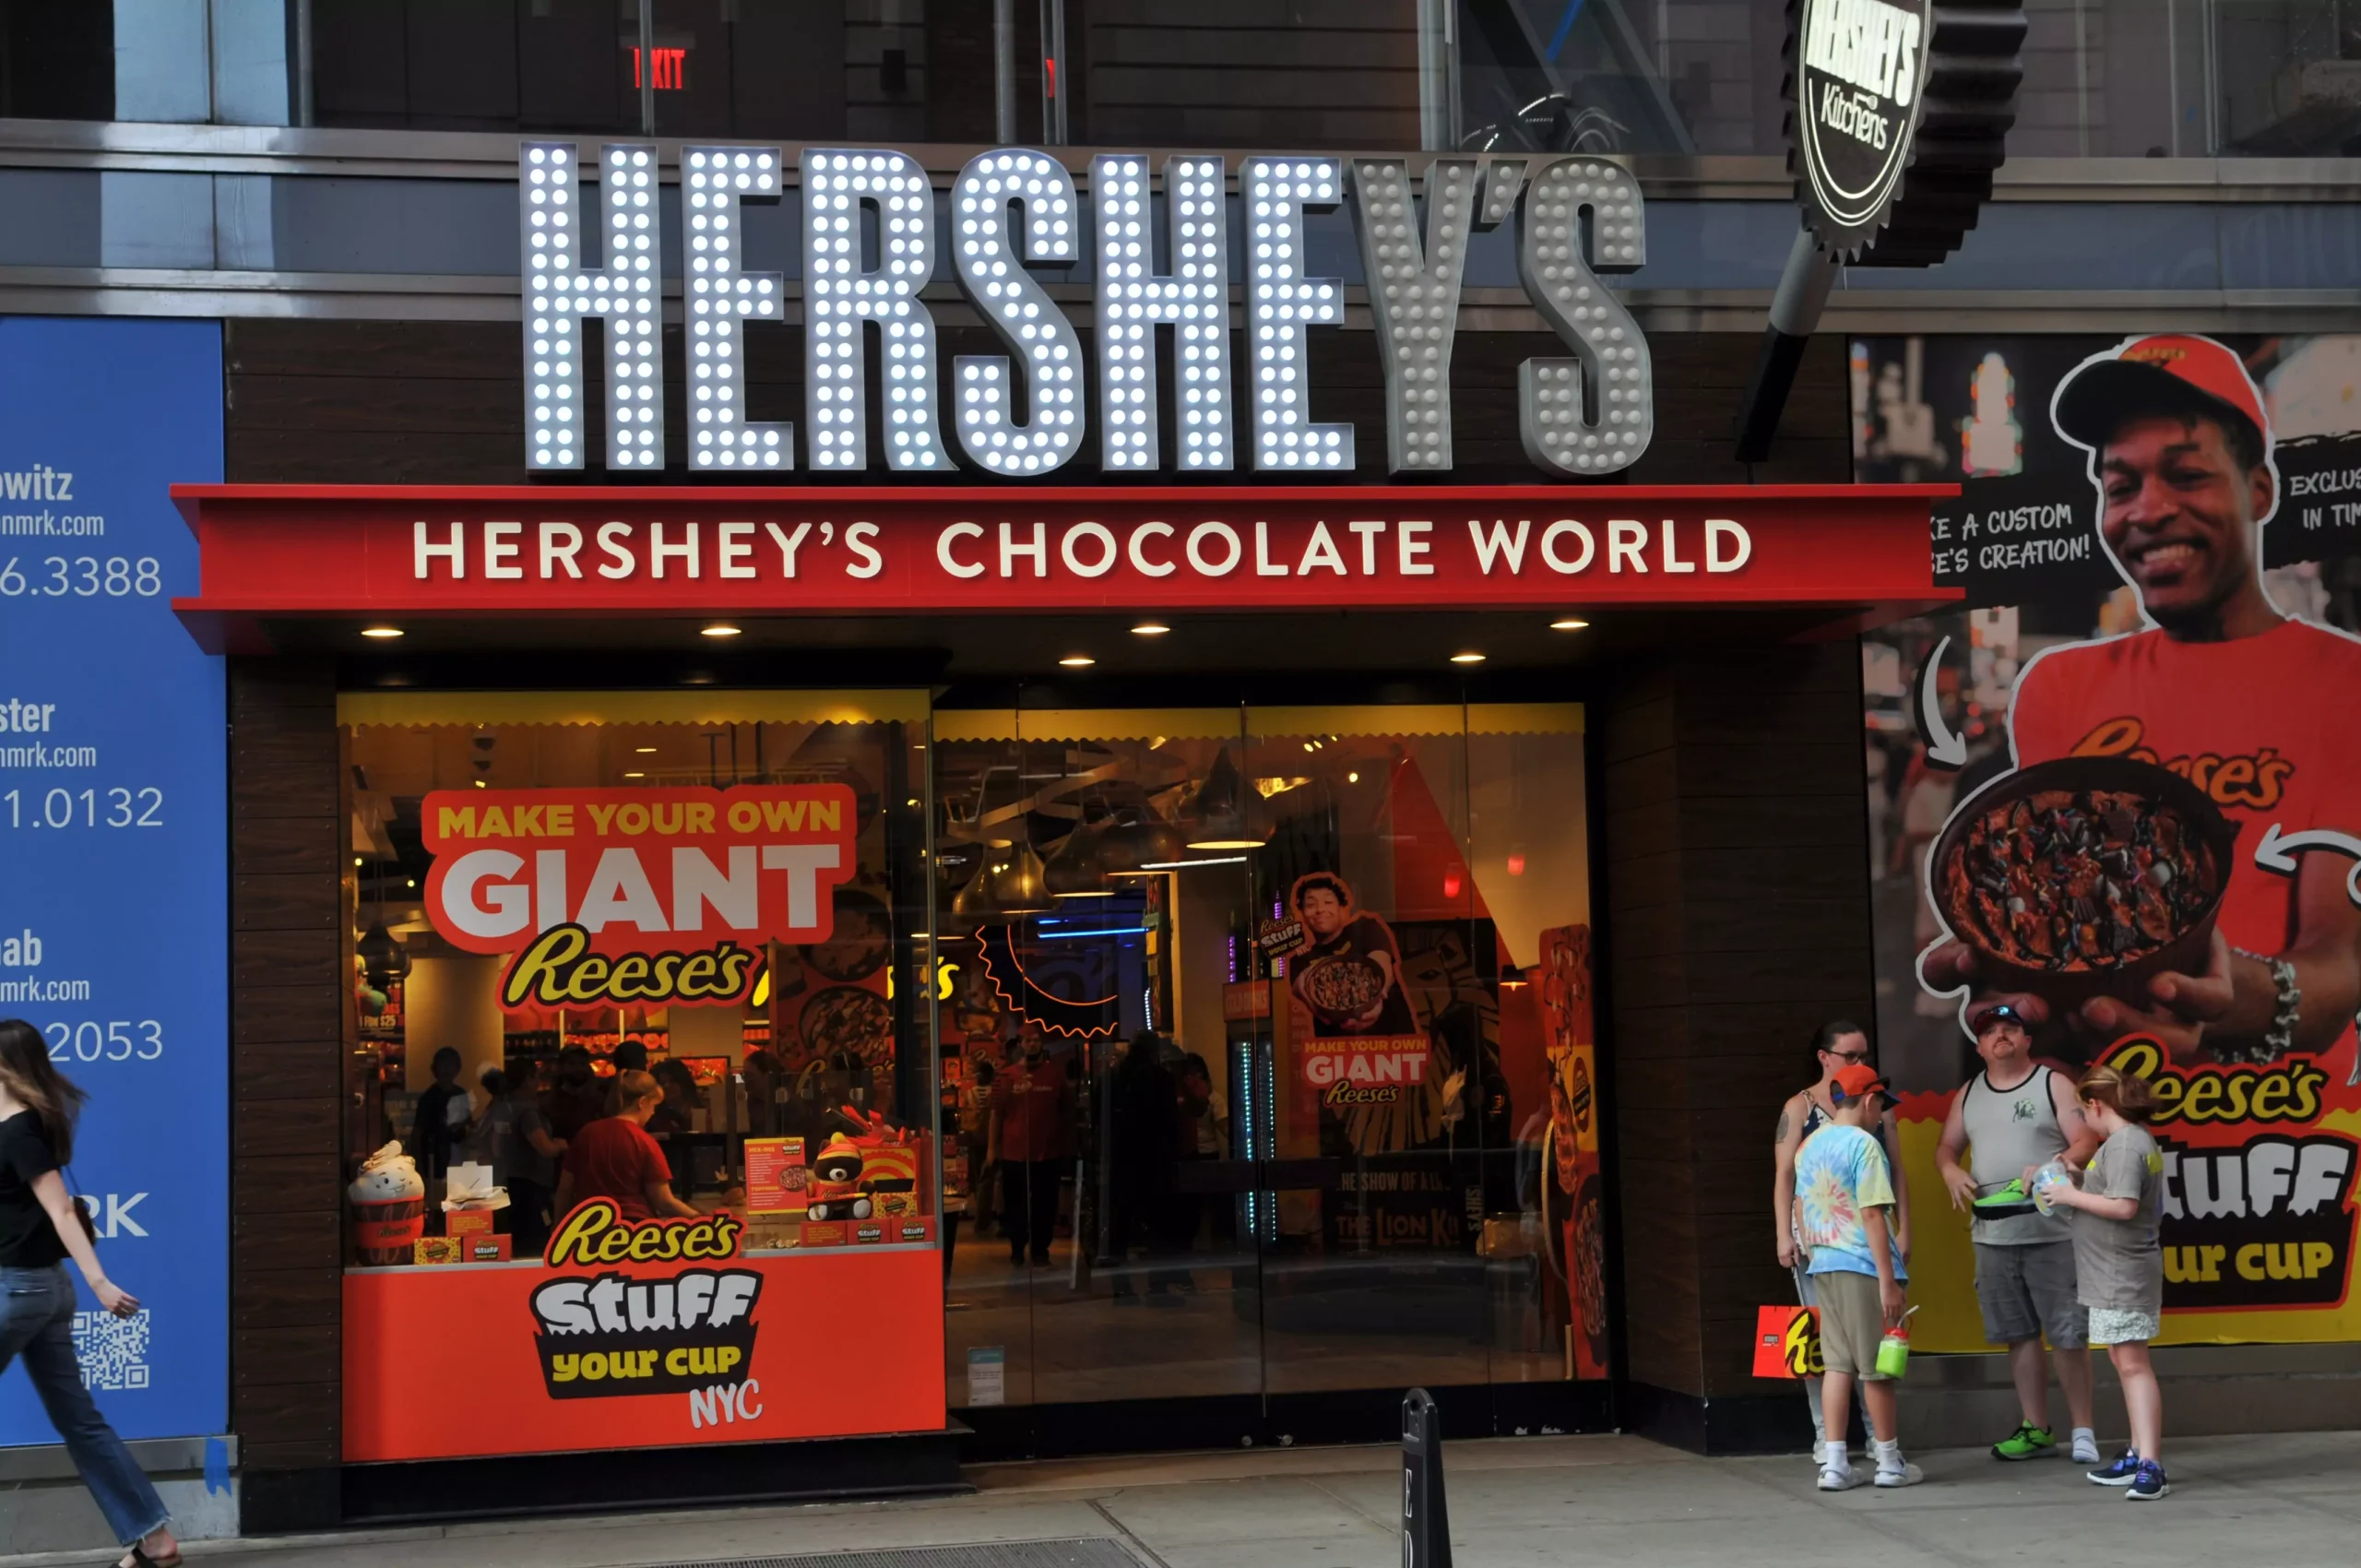 Hersheys Chocolate world times Square